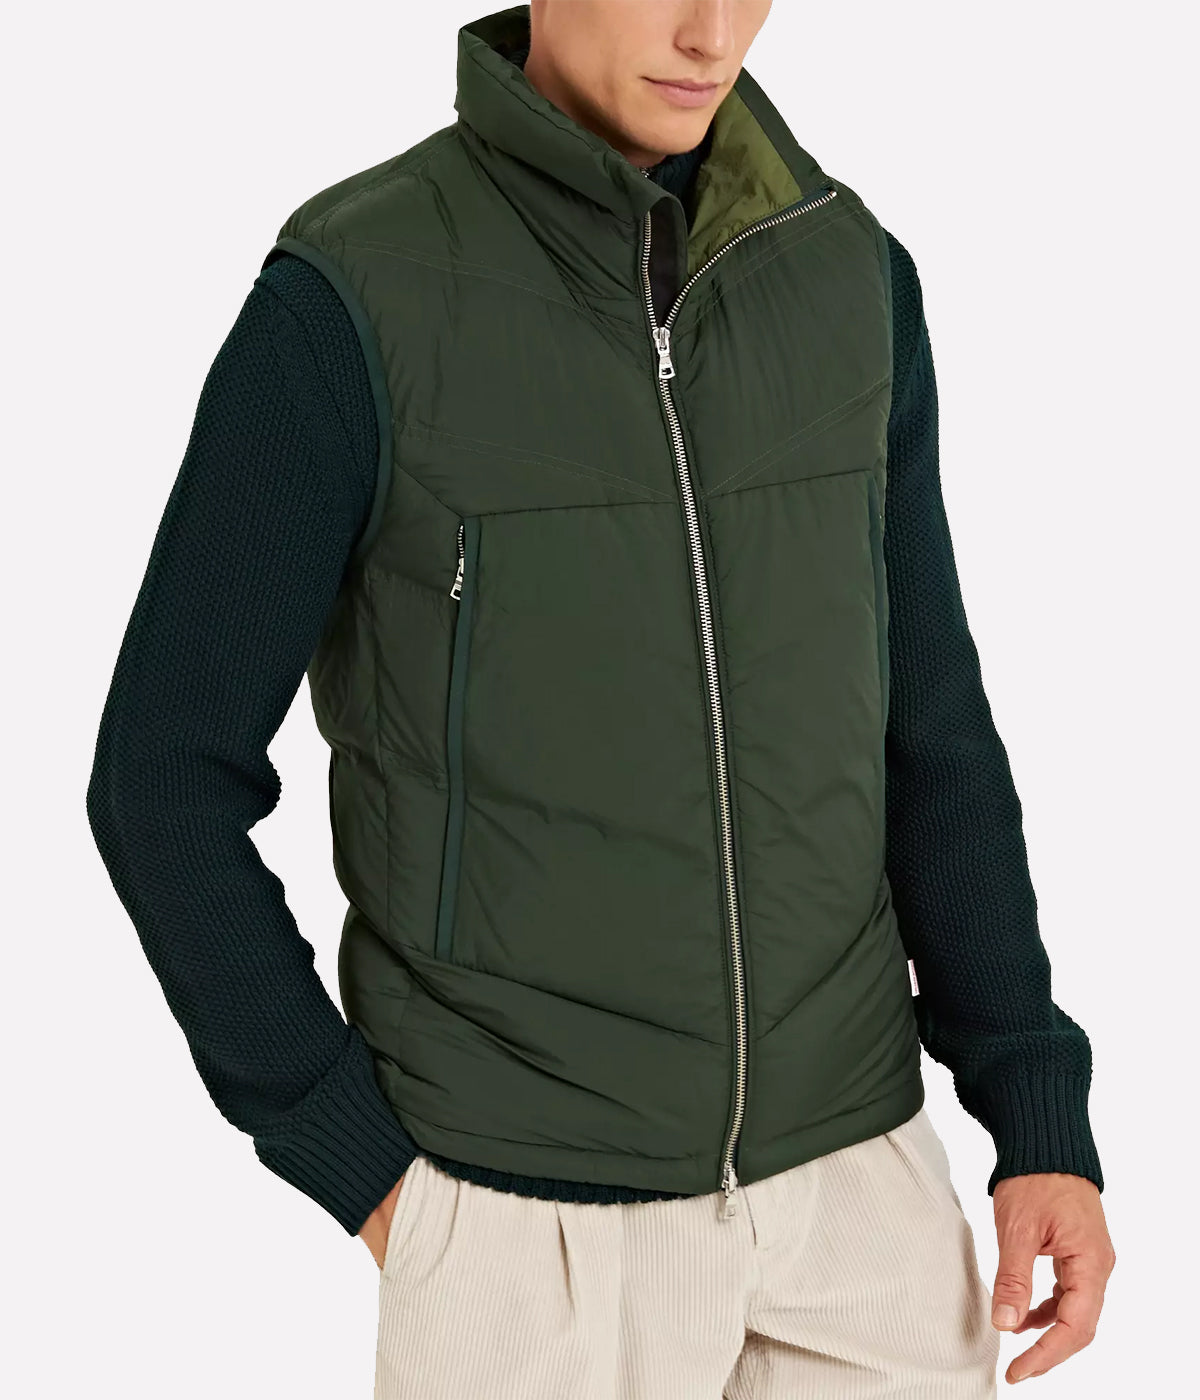 Acosta Jacket in Bristlecone Pine